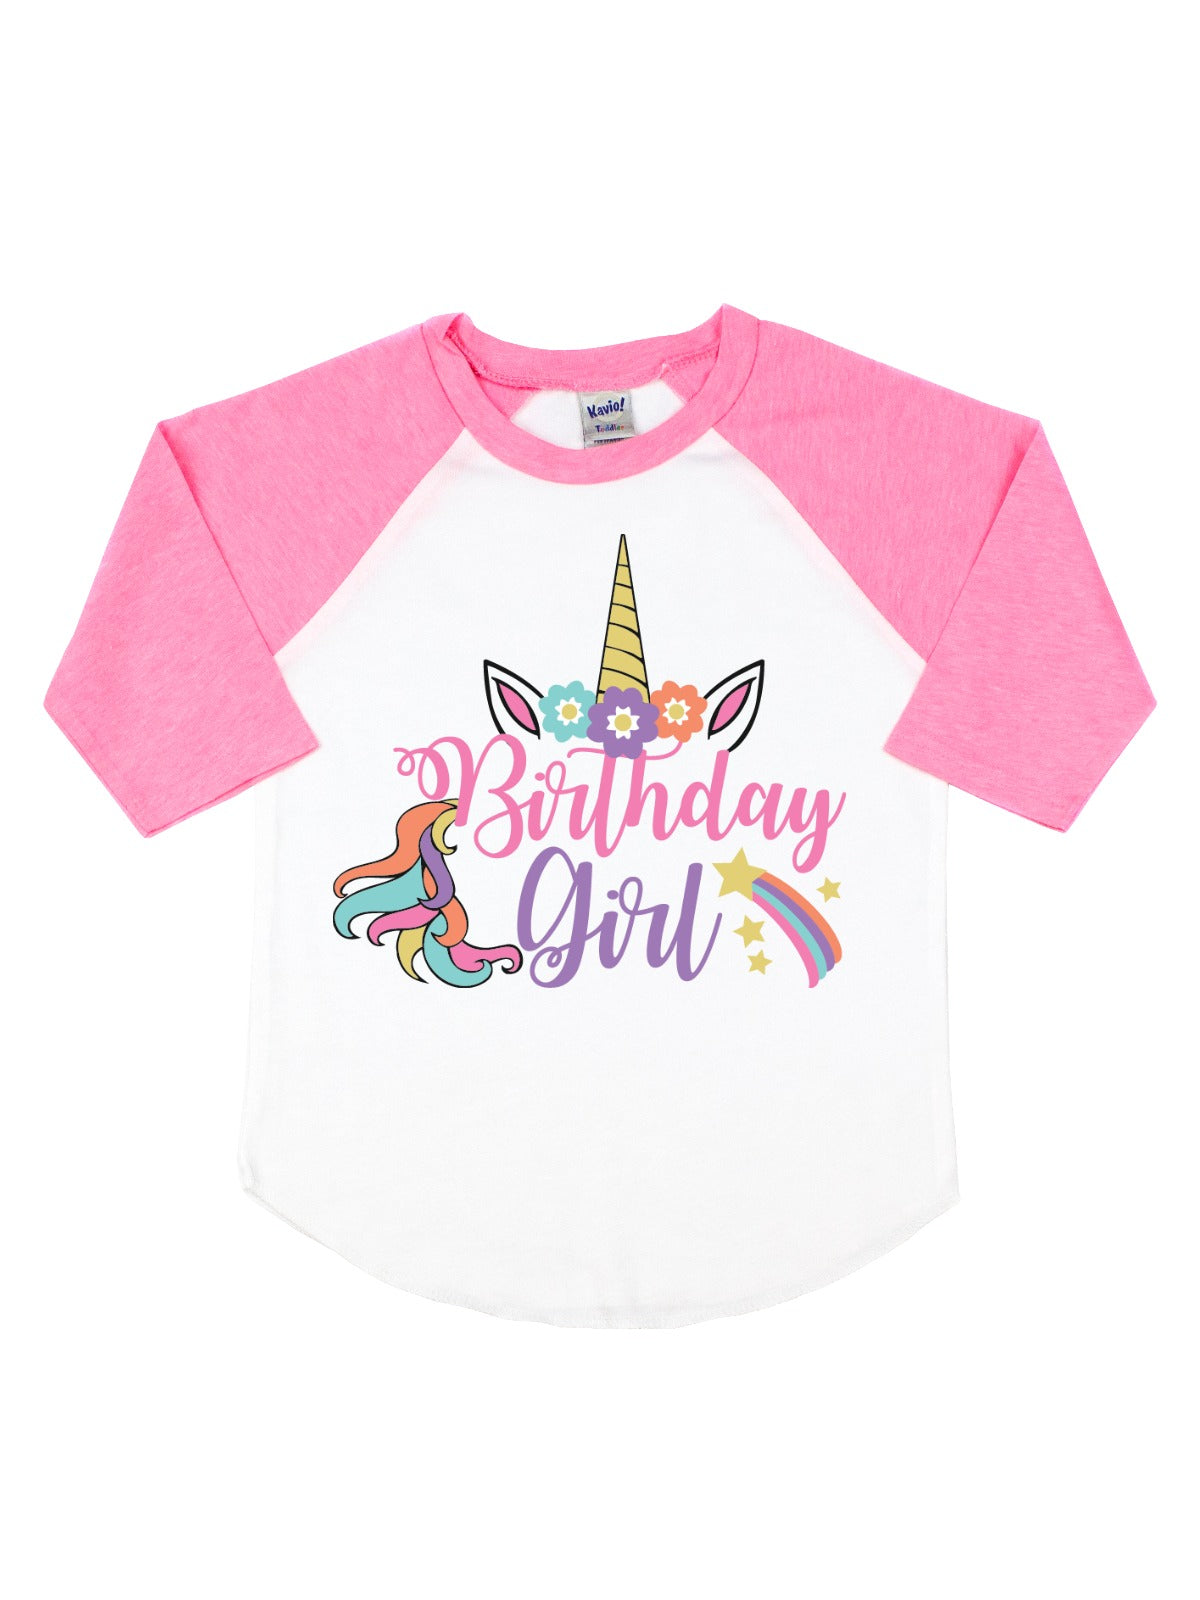 3/4 sleeve length girls pink and white unicorn bday shirt